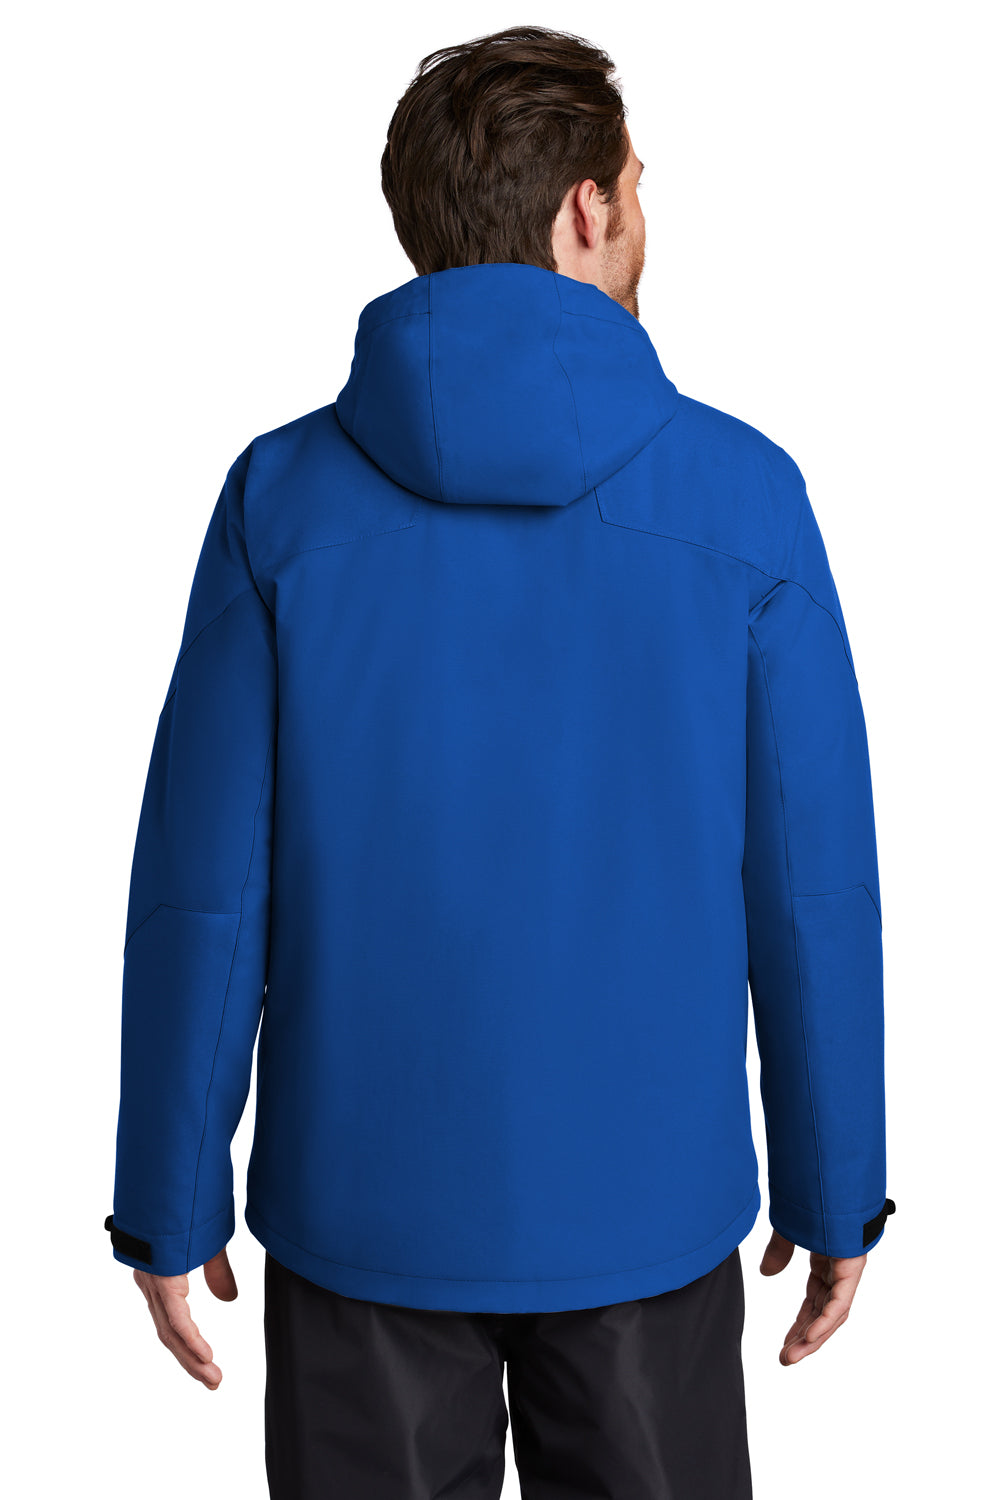 Port Authority Mens Tech Waterproof Full Zip Hooded Jacket Cobalt Blue Side